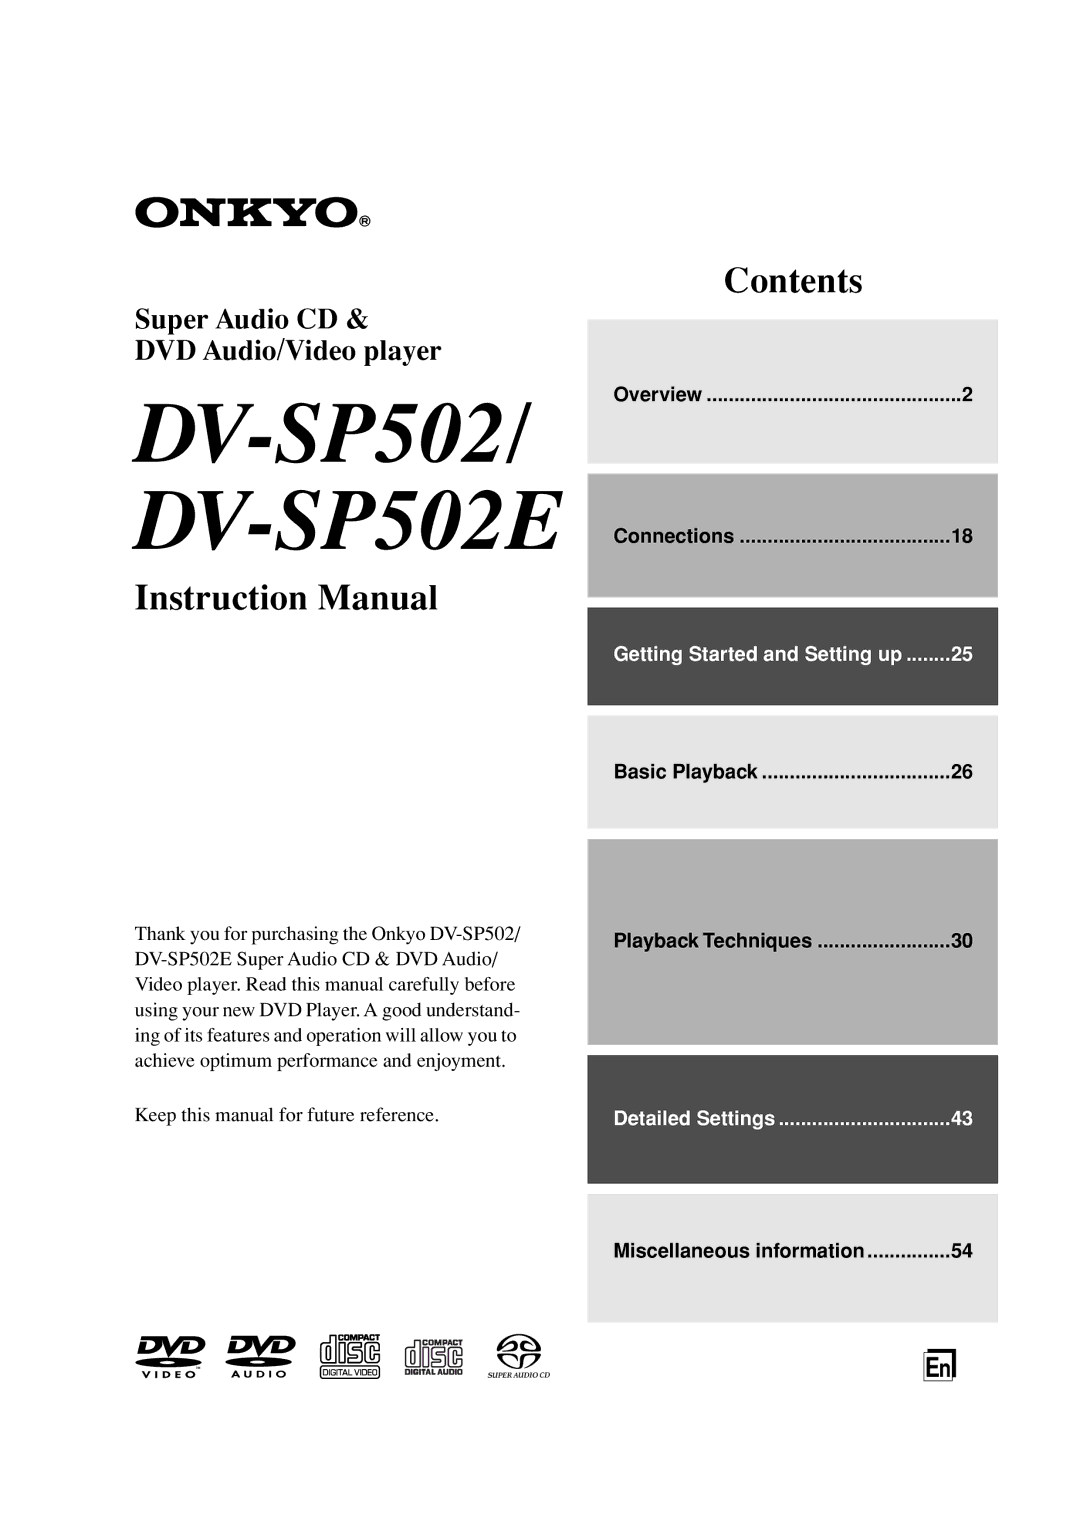 Onkyo instruction manual DV-SP502/ DV-SP502E 